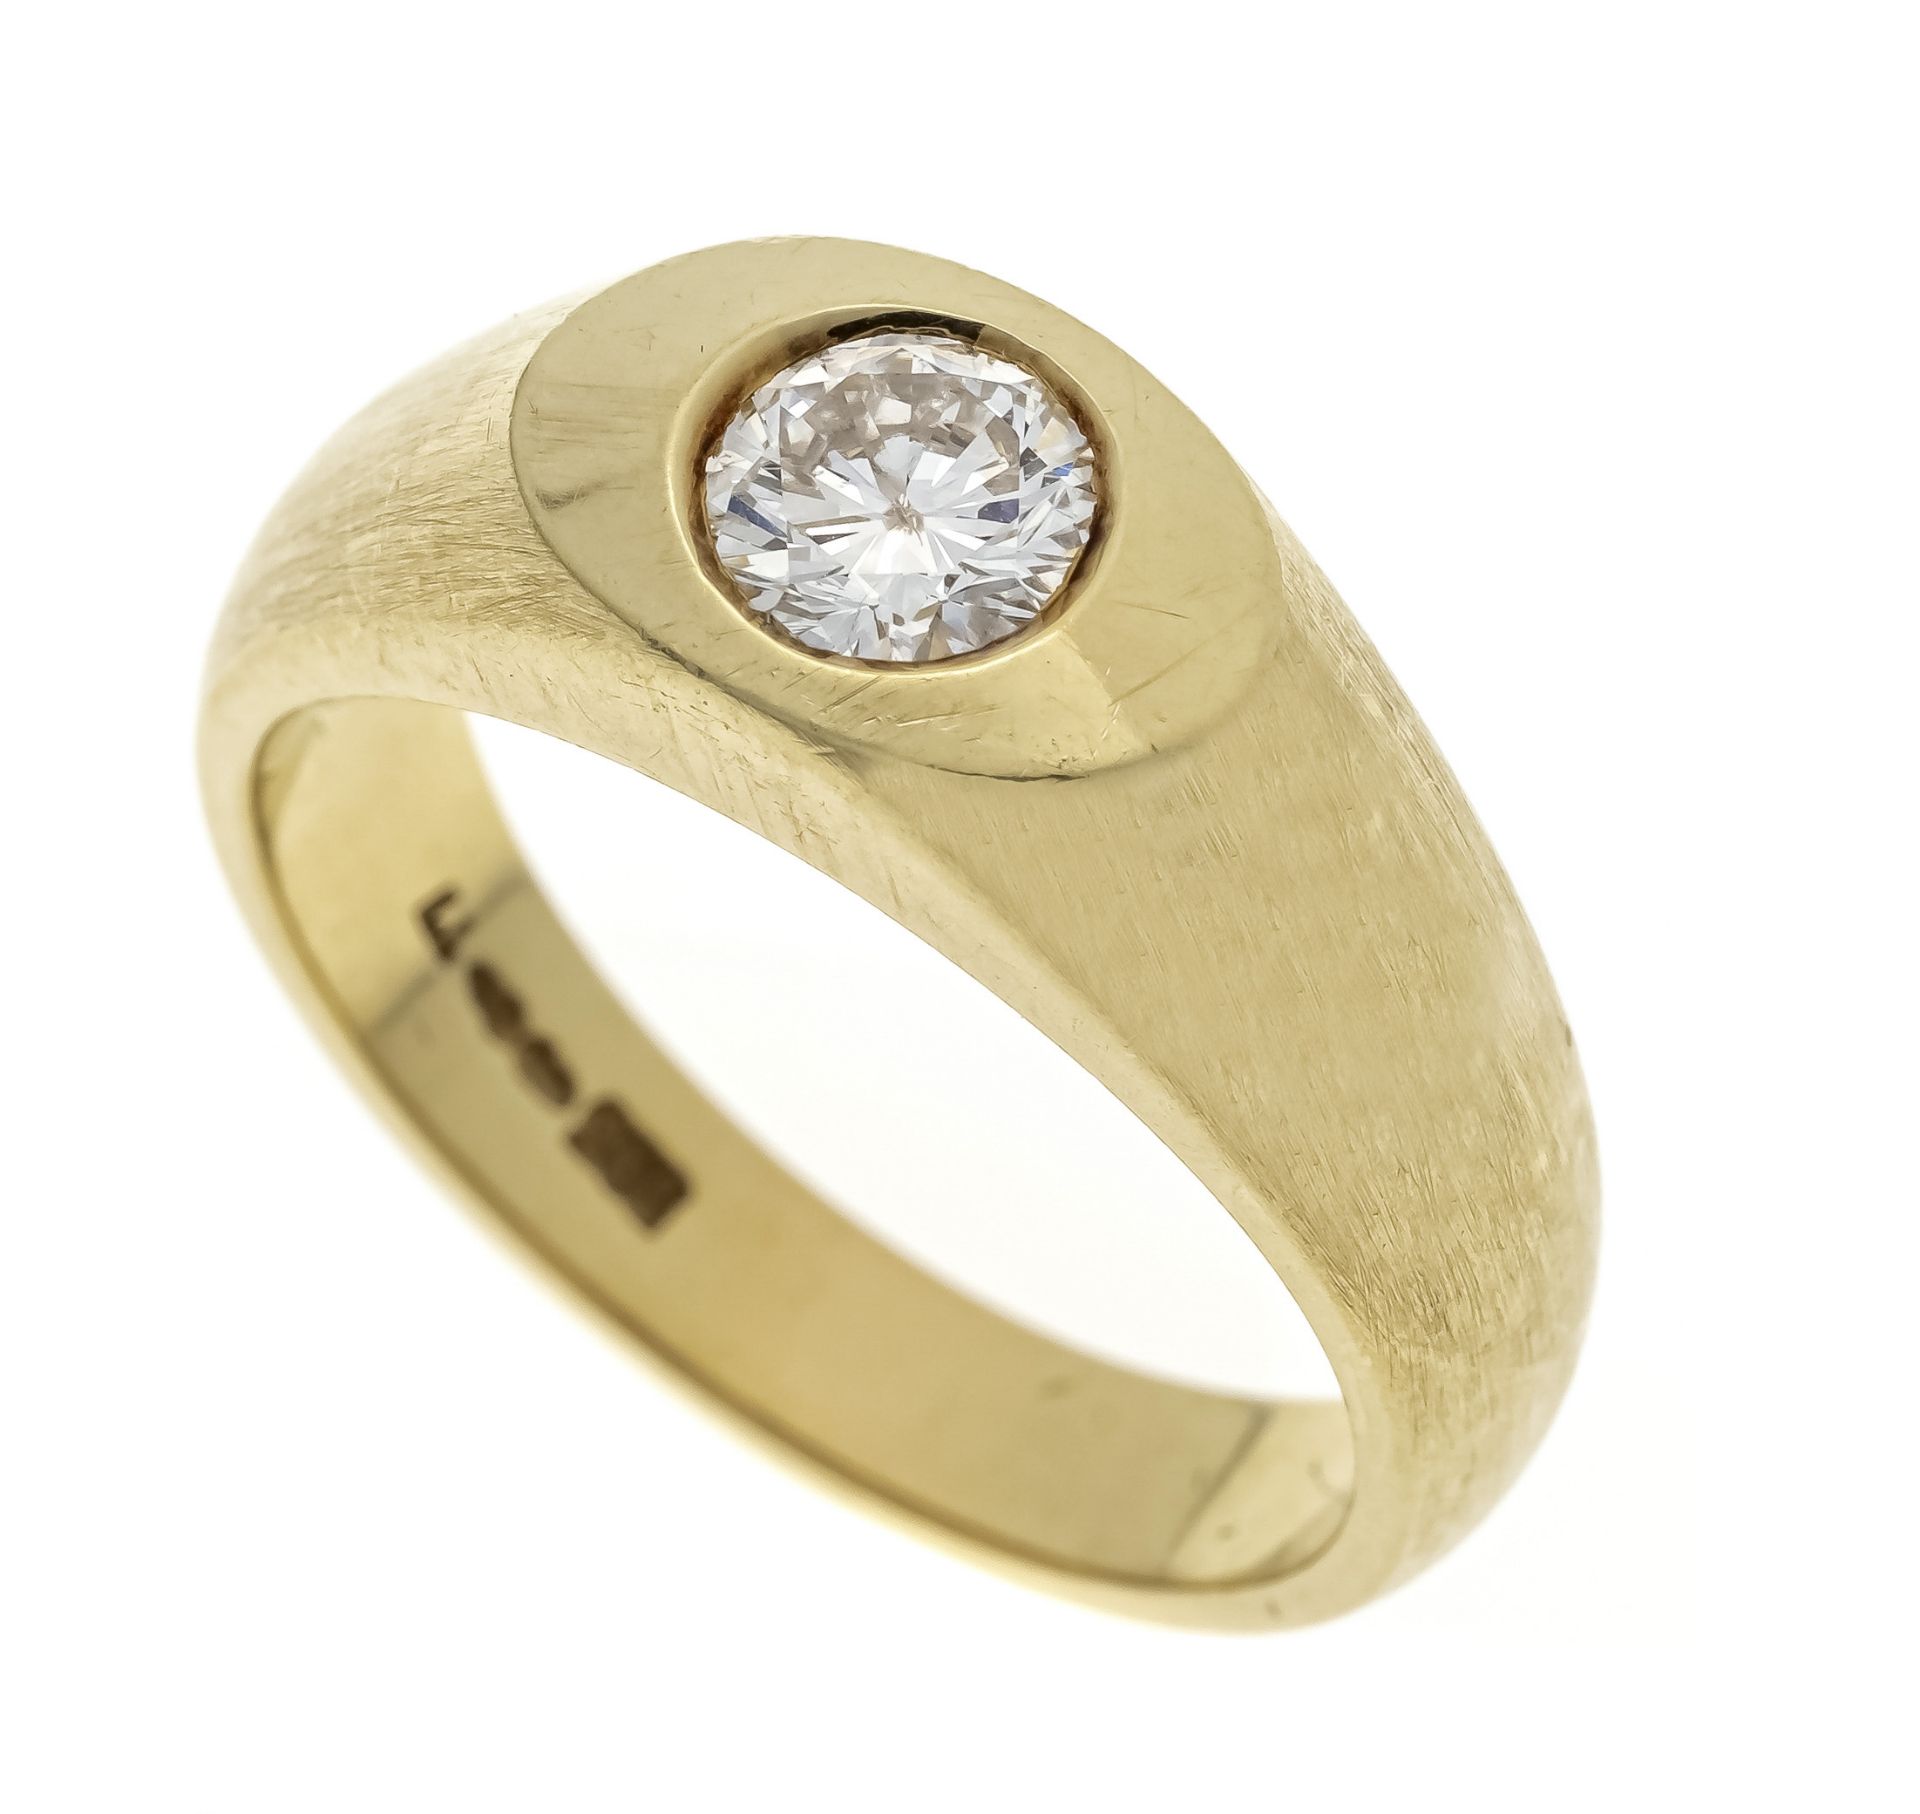 Solitaire ring GG 585/000 with a brilliant-cut diamond 0.65 ct (hallmarked) fine white-white (G-H) /